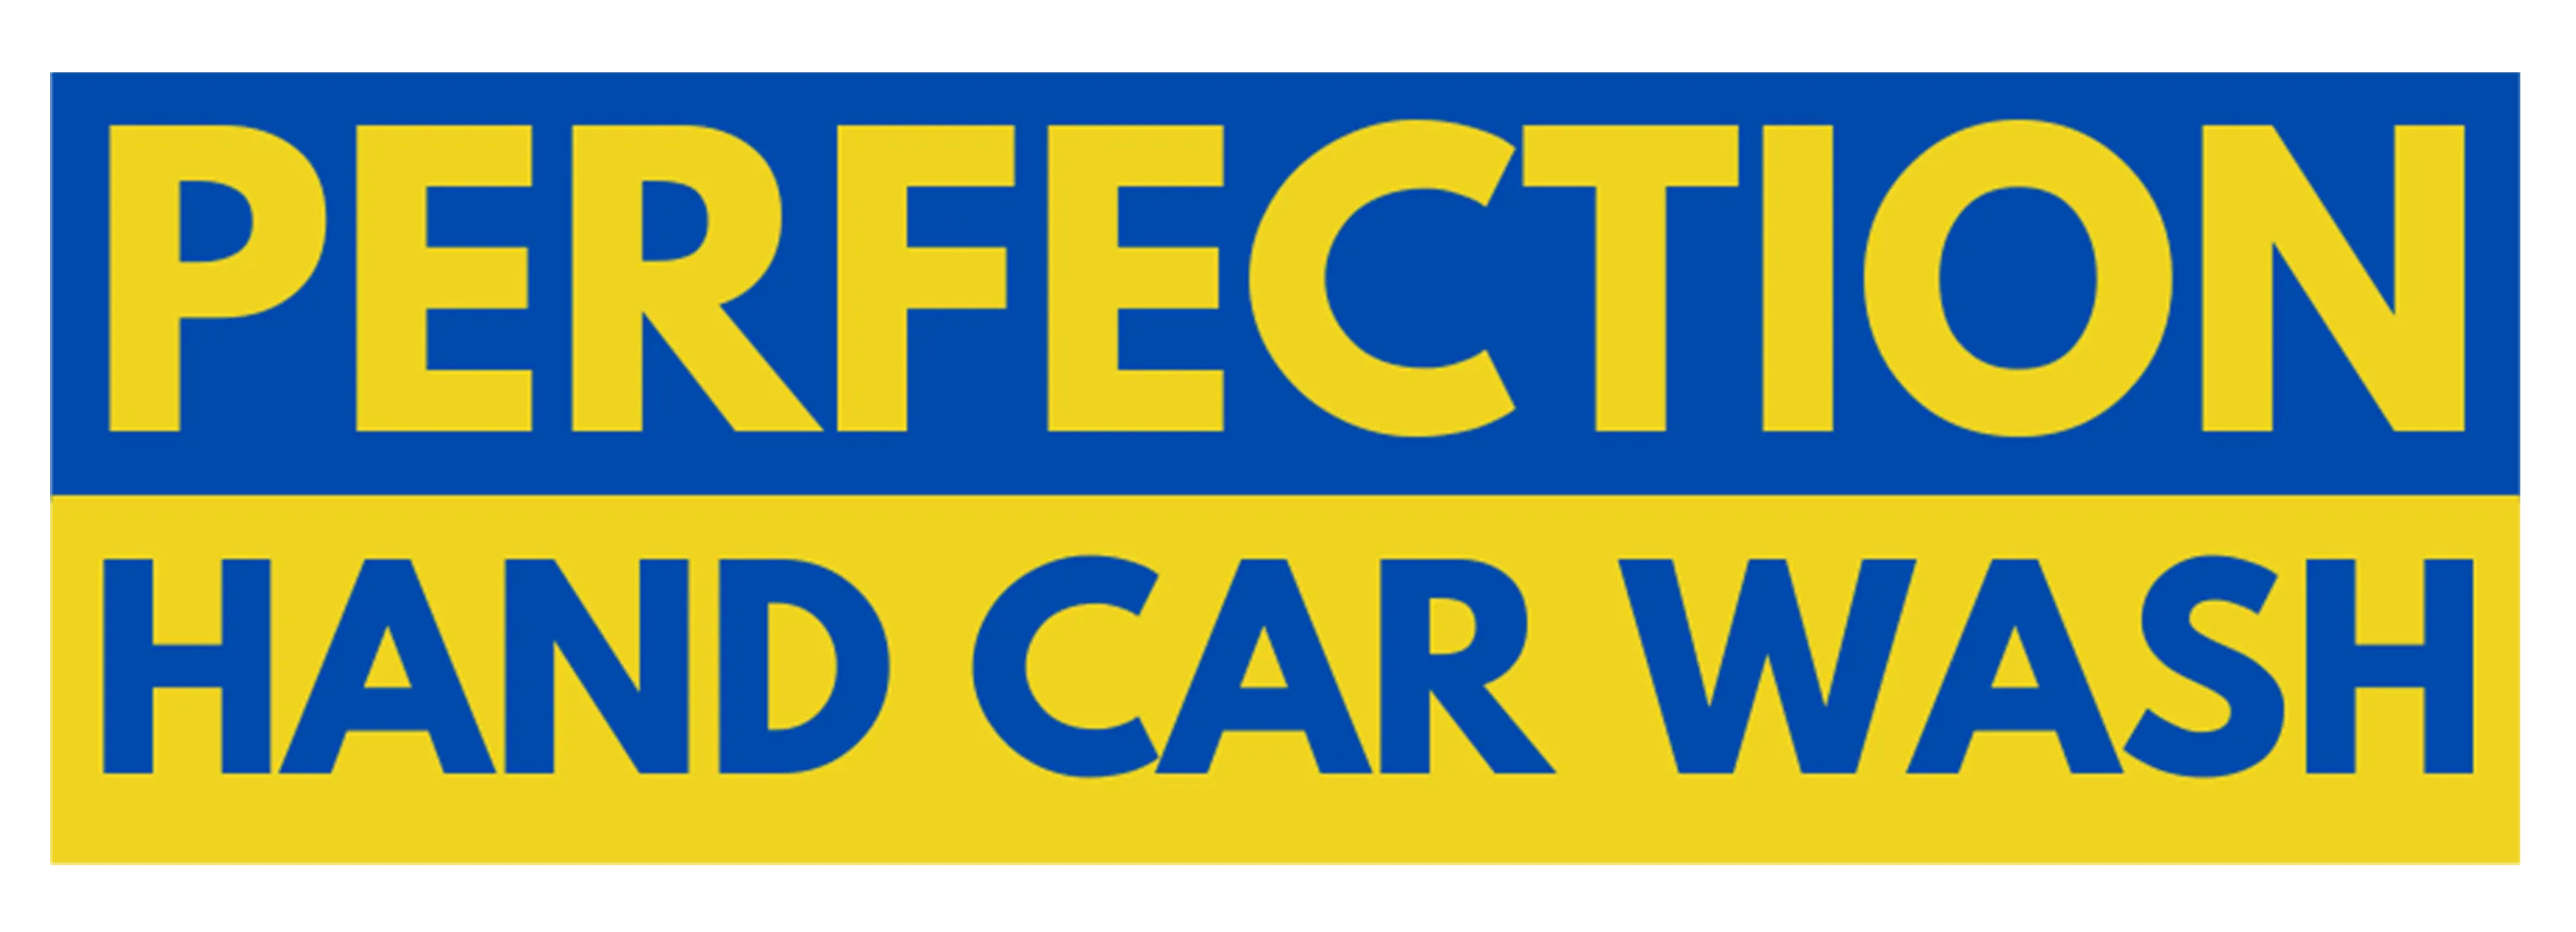 perfection hand car wash logo